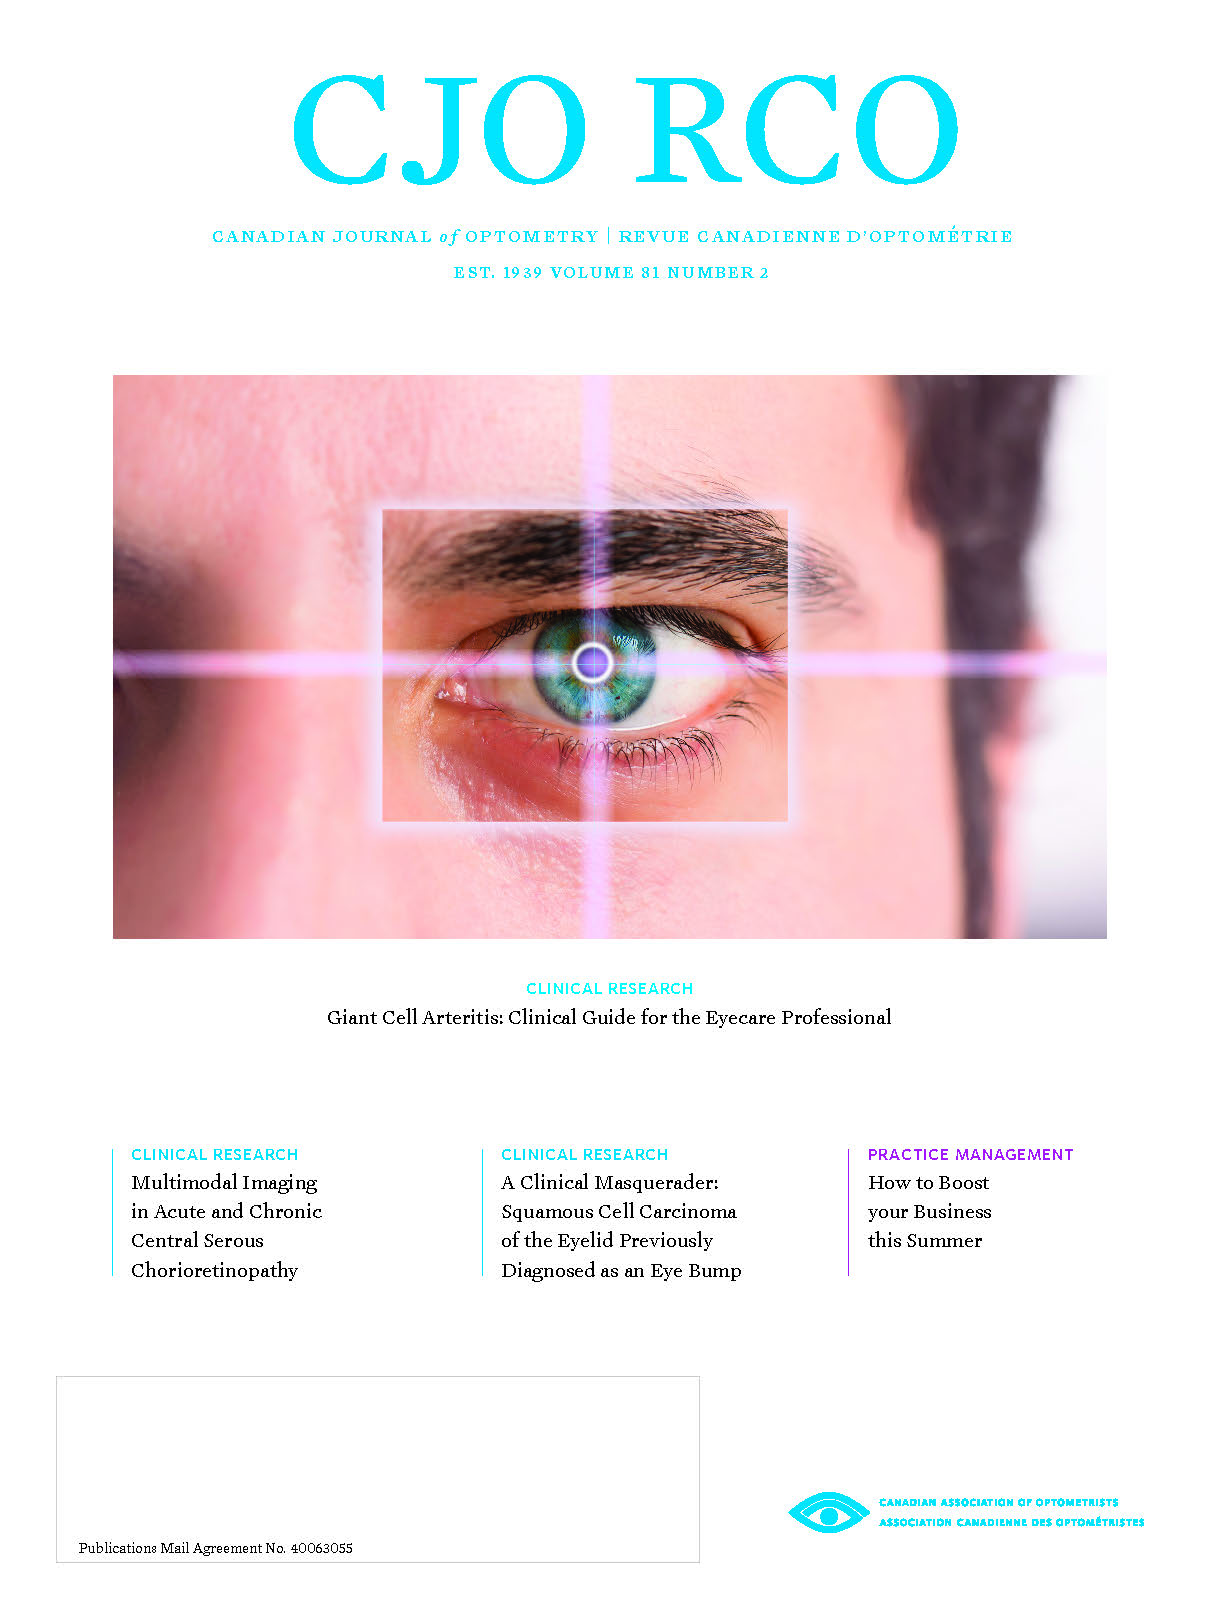 Does eye insurance cover lasik information